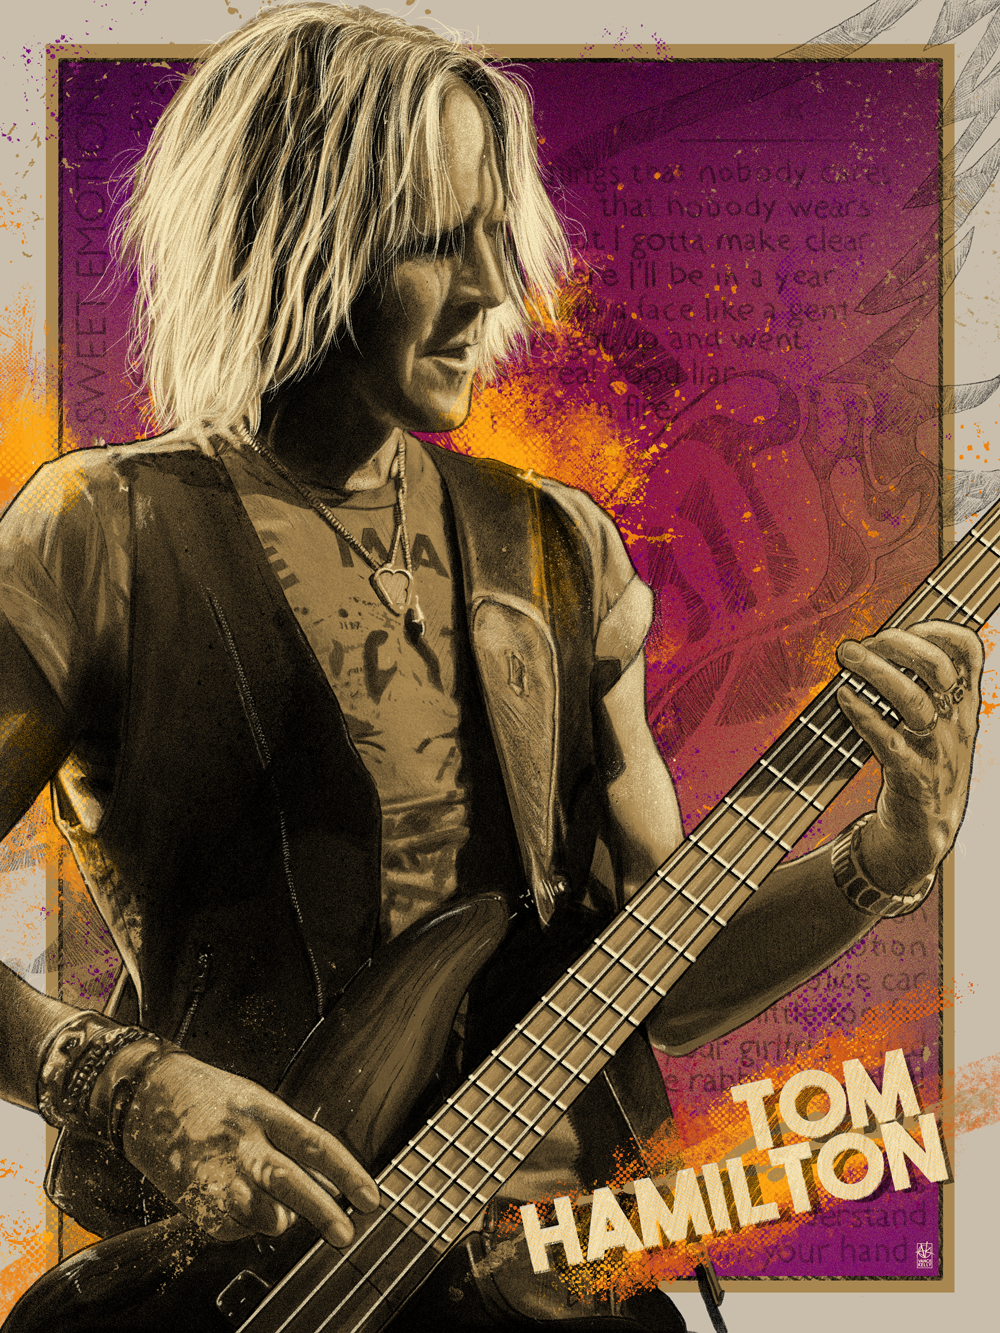 Signature Series: Aerosmith's Tom Hamilton "Sweet Emotion"